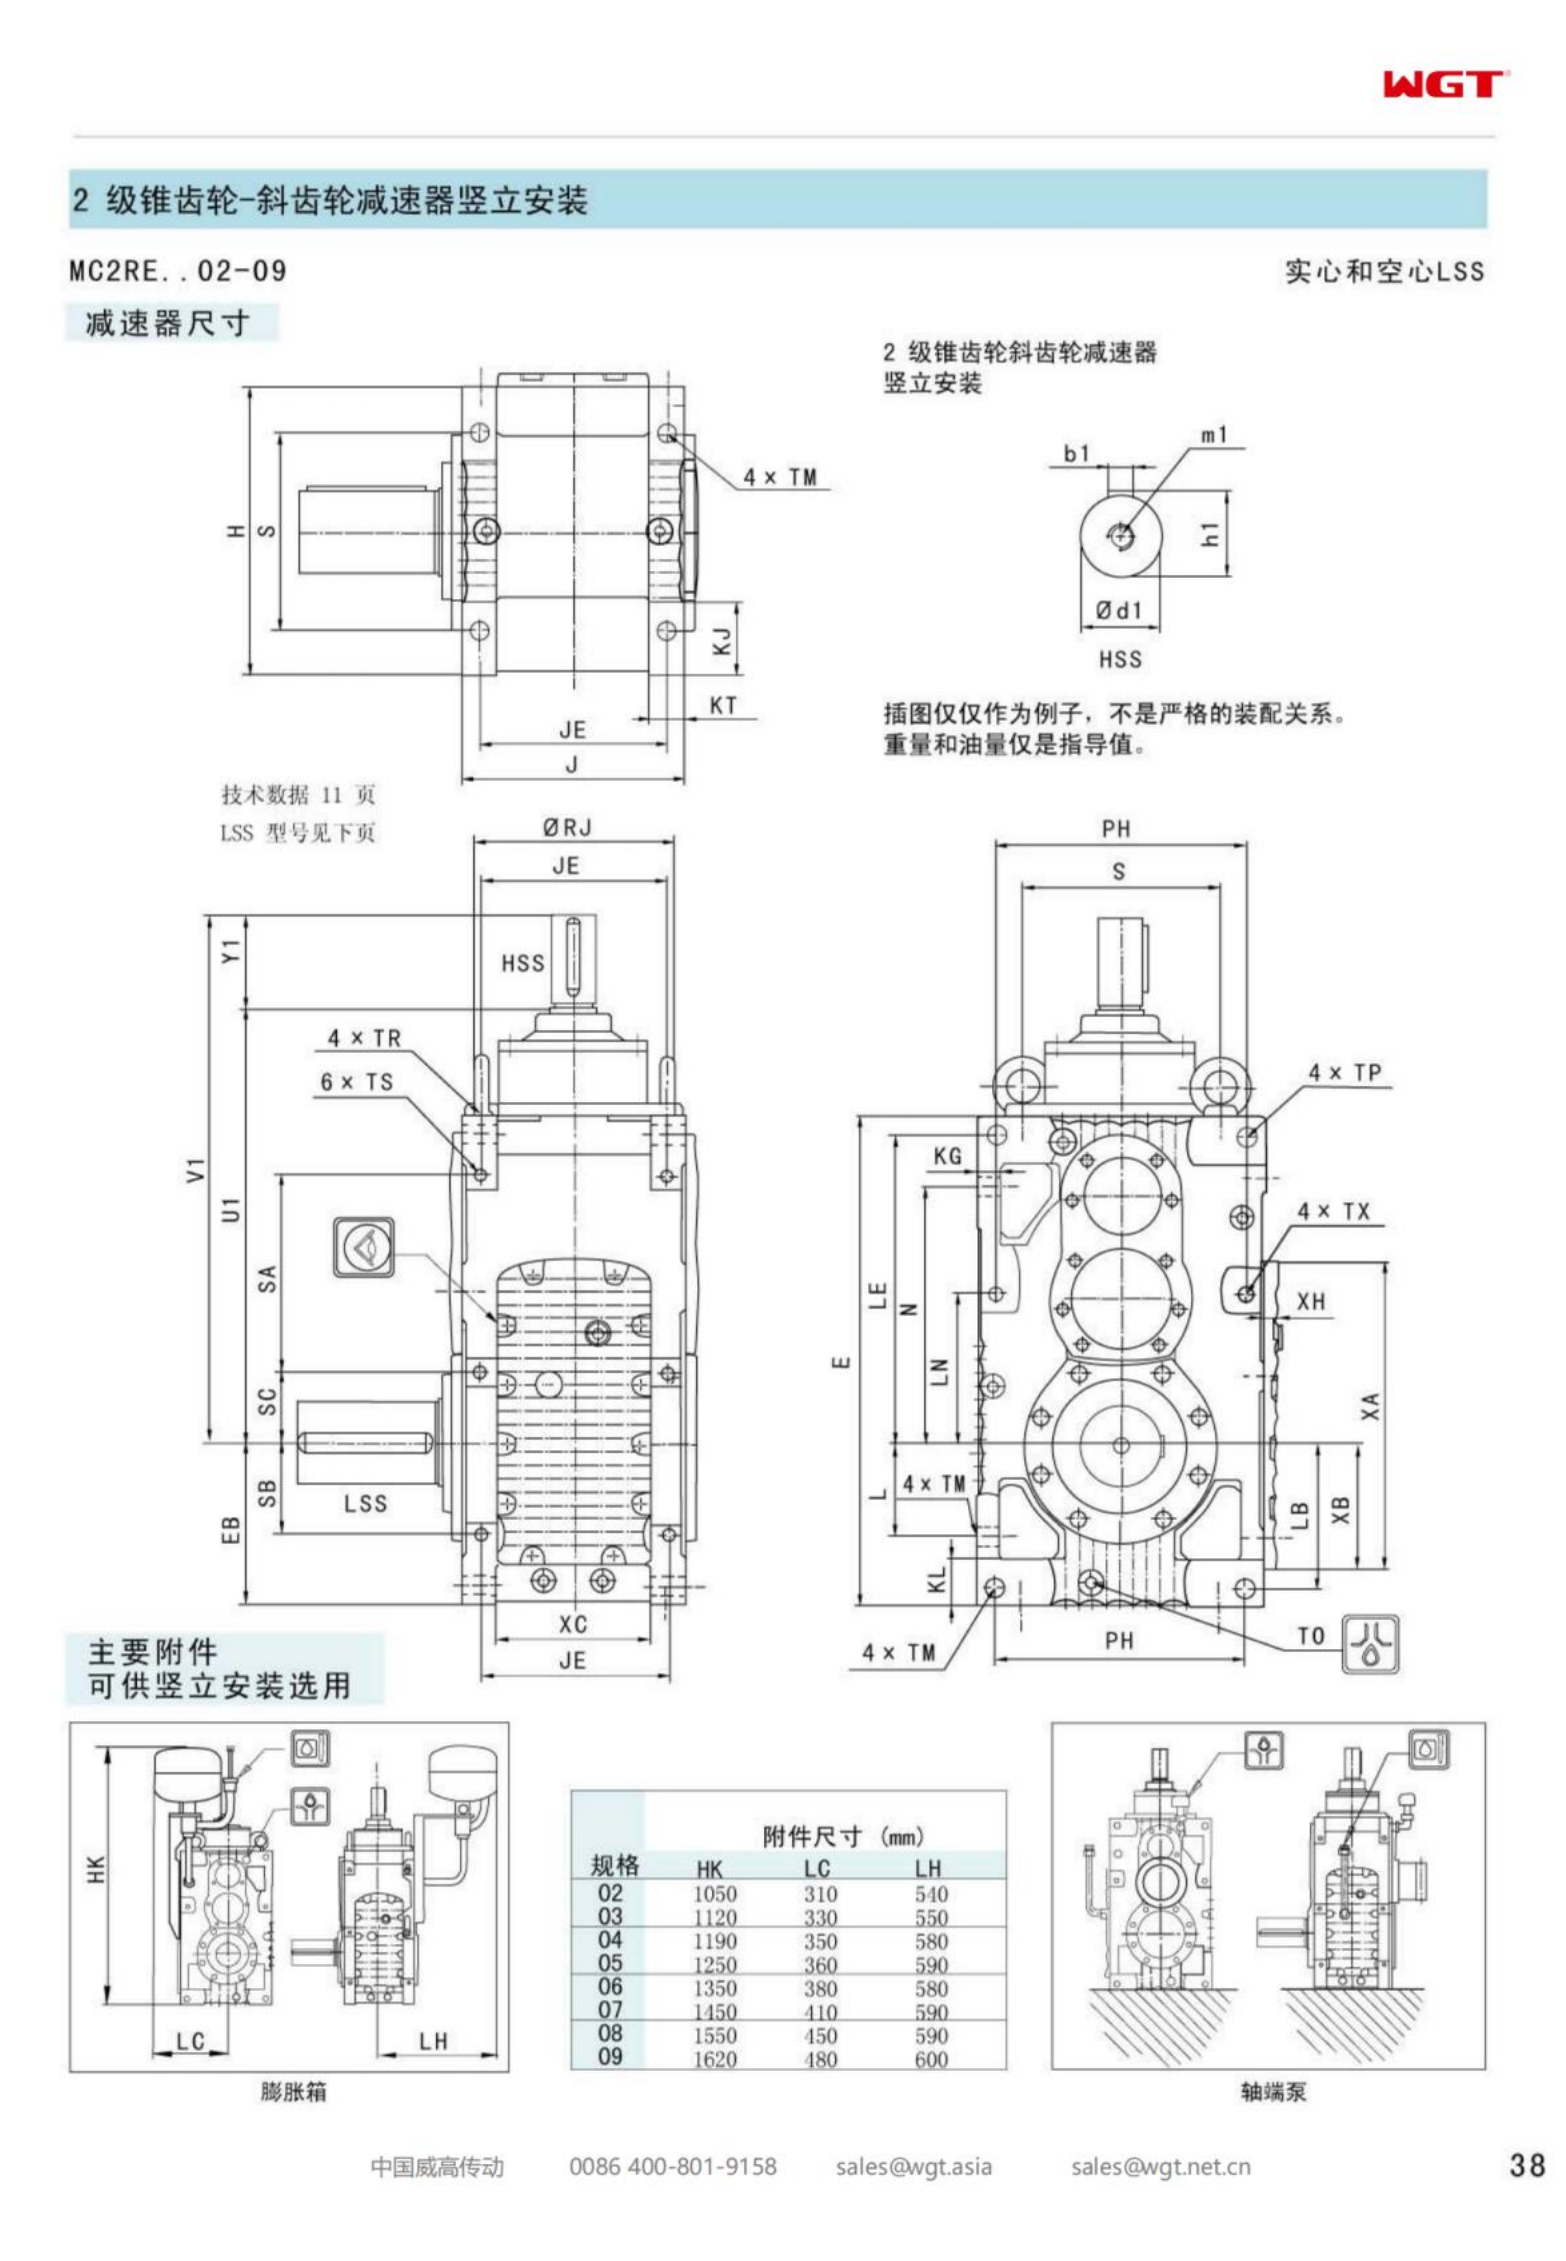 MC2REHF02 replaces _SEW_MC_Series gearbox (patent)